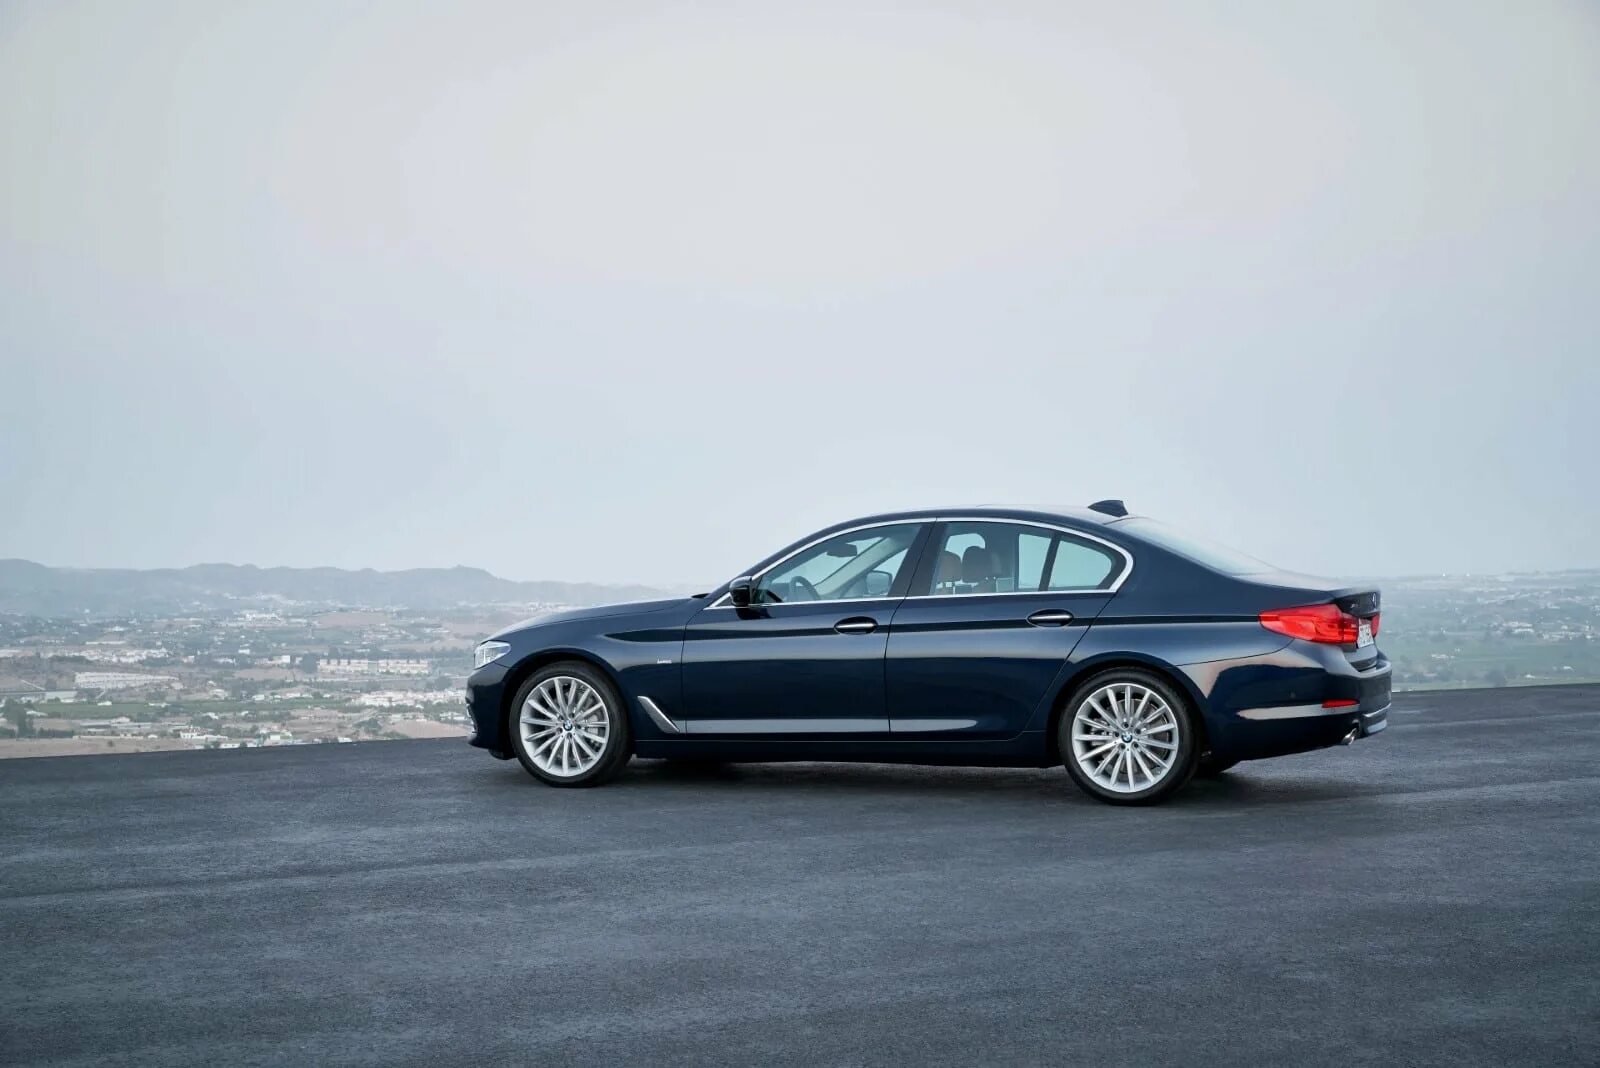 БМВ 530d седан. BMW 5 Series g30 2017. BMW 5 g30 Luxury line. BMW 530d XDRIVE. Luxury line